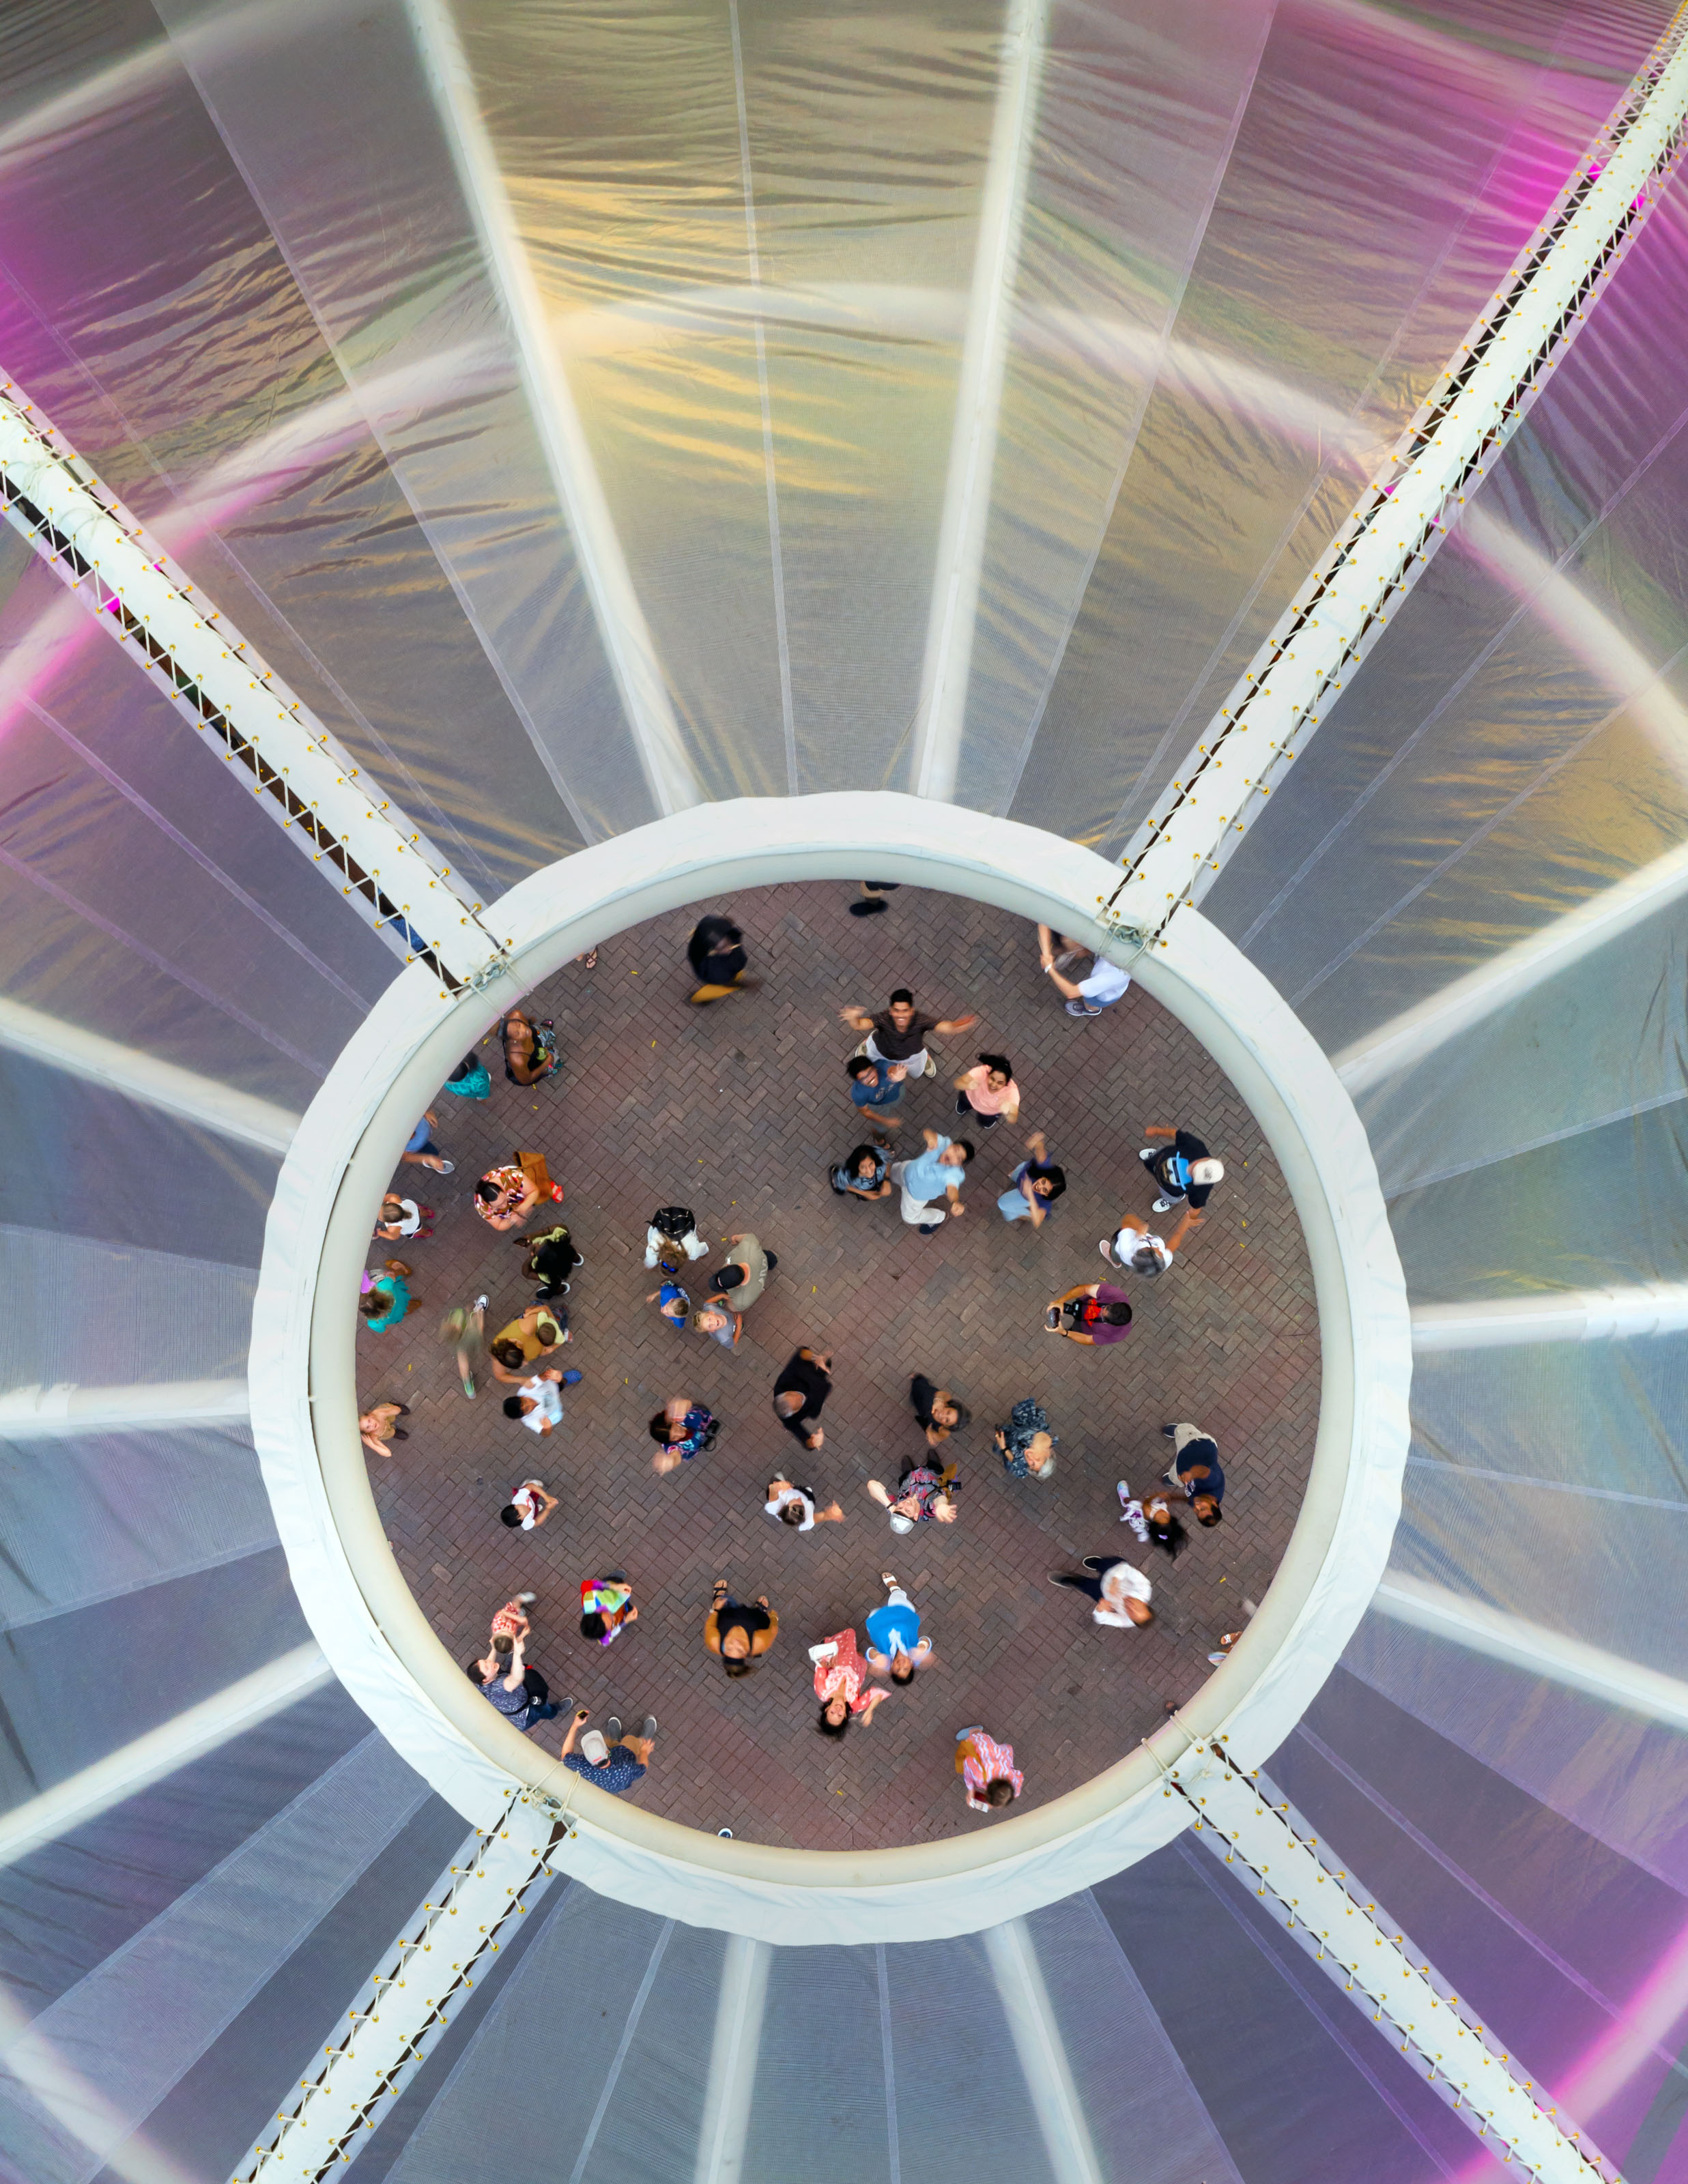 Exhibit Columbus 2023: InterOculus installation from above, crowd below